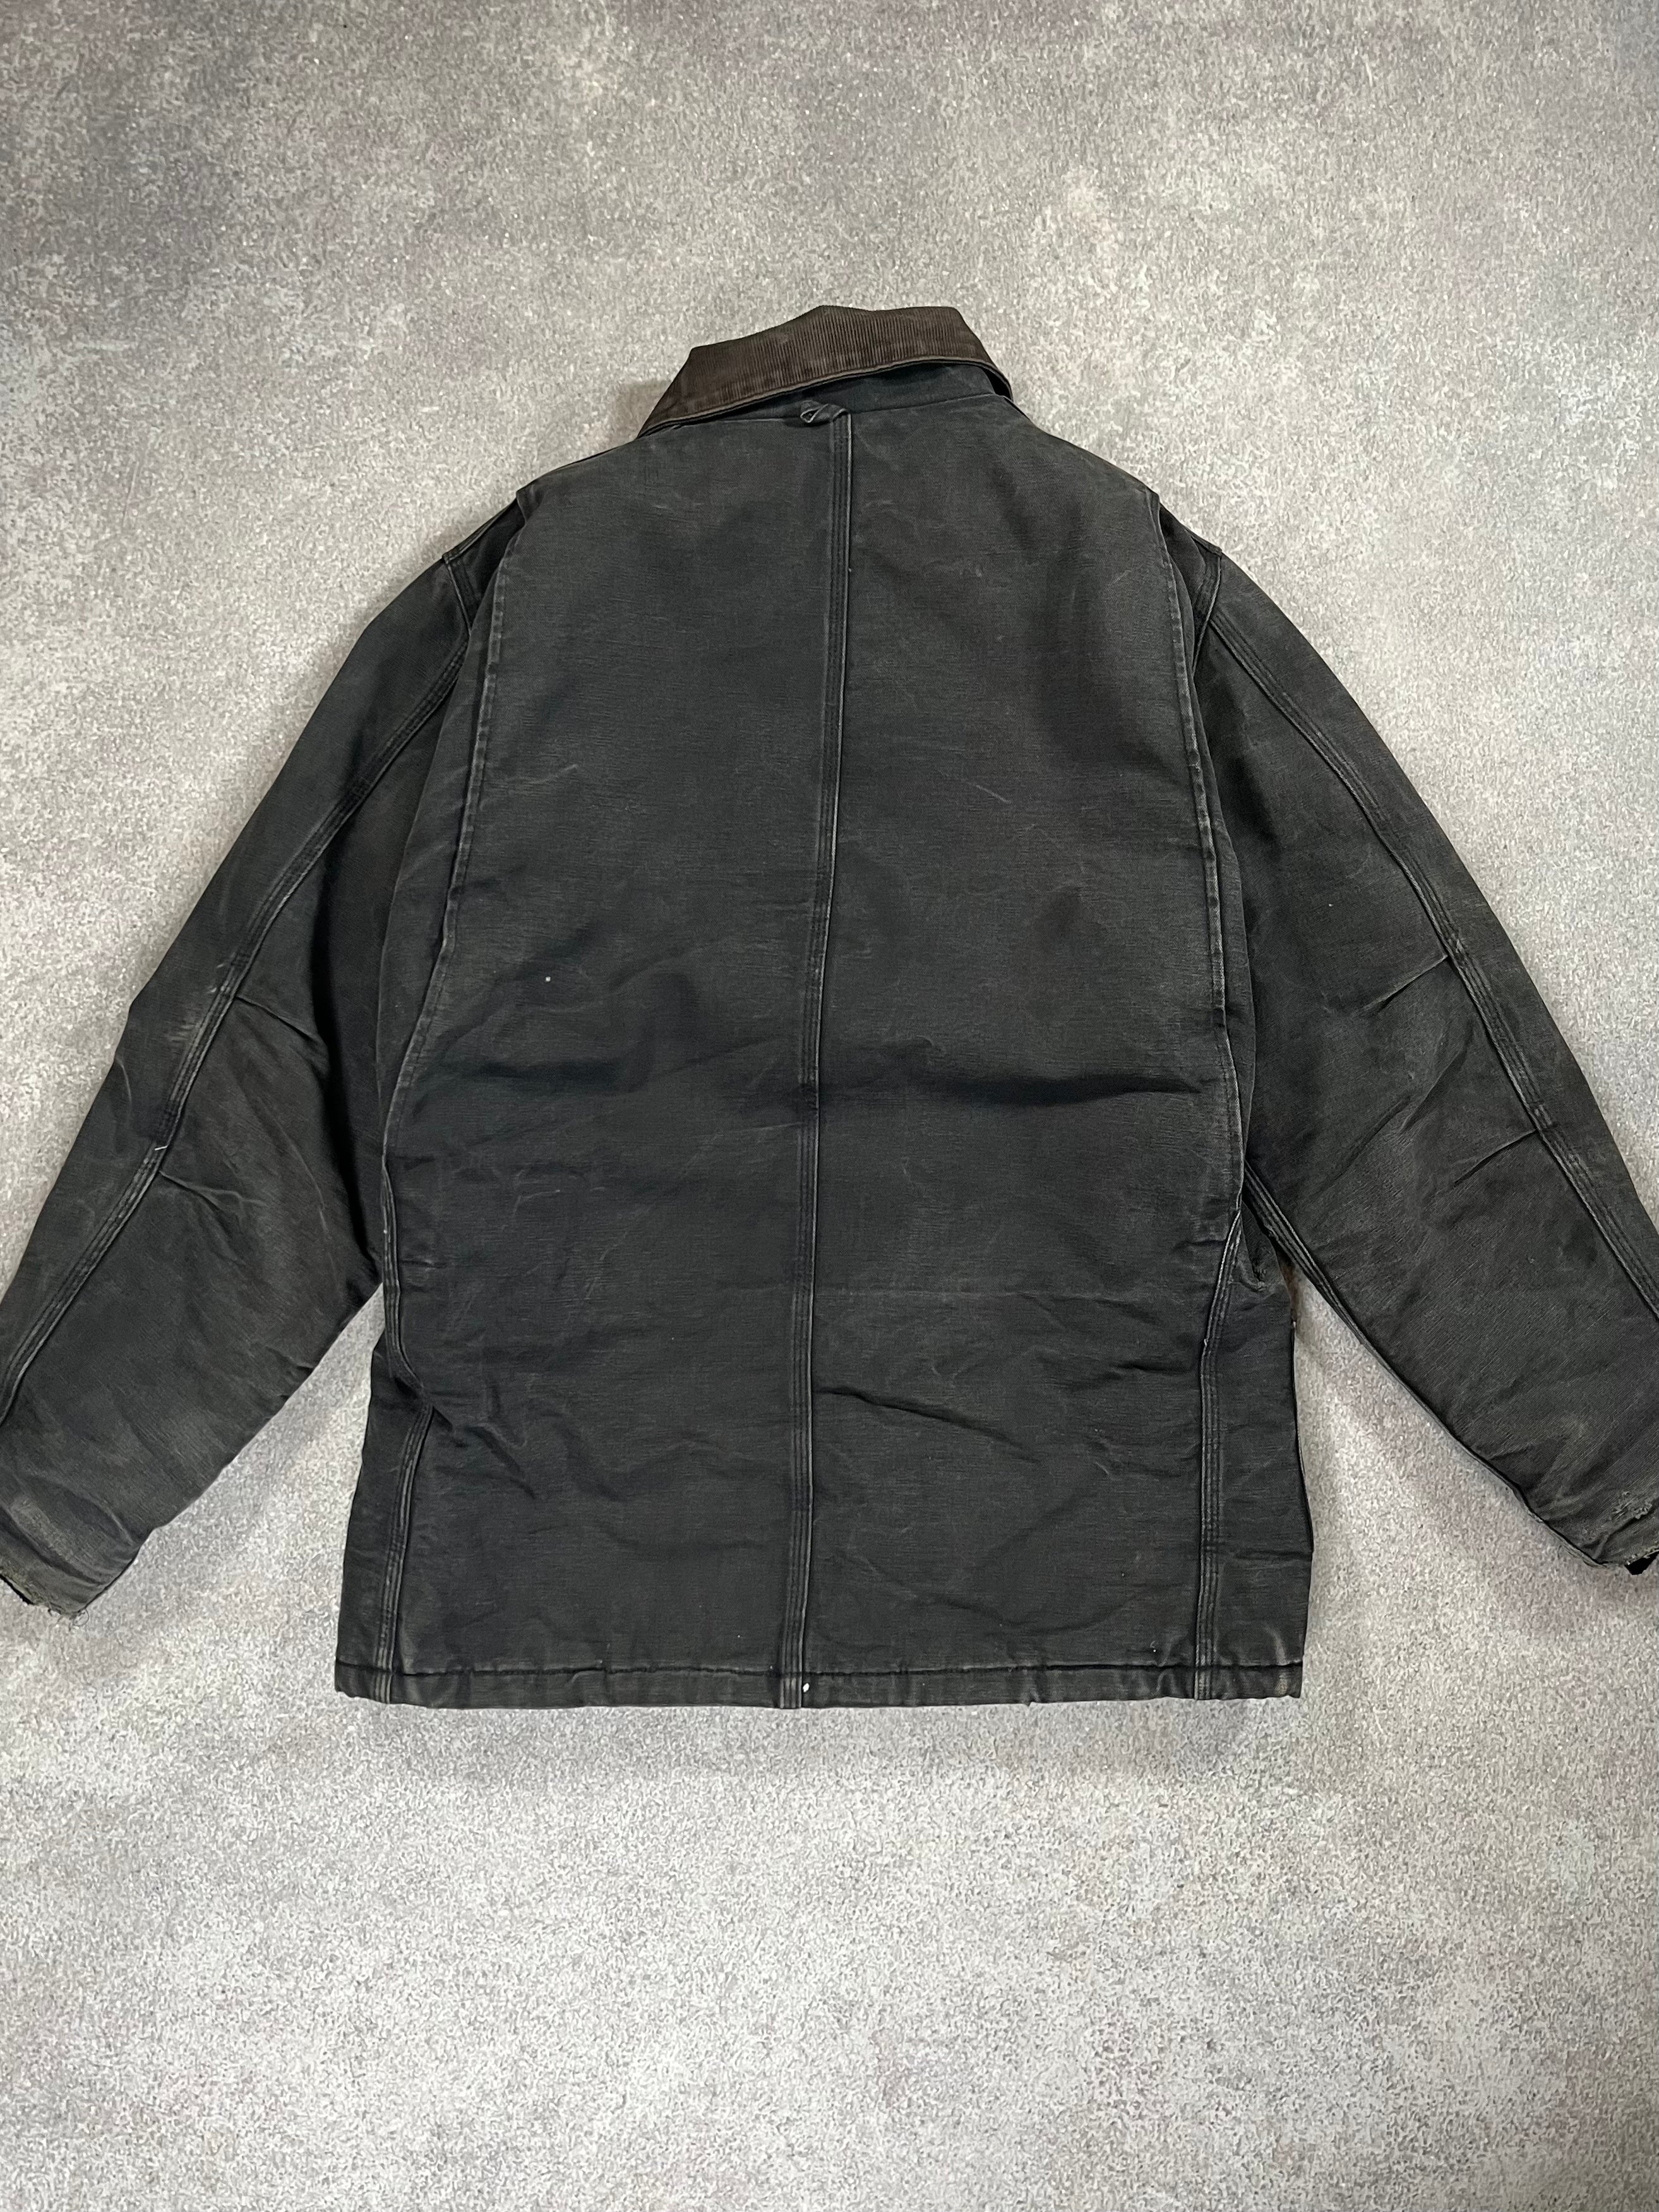 Carhartt Chore Coat Jacket Black // Small - RHAGHOUSE VINTAGE